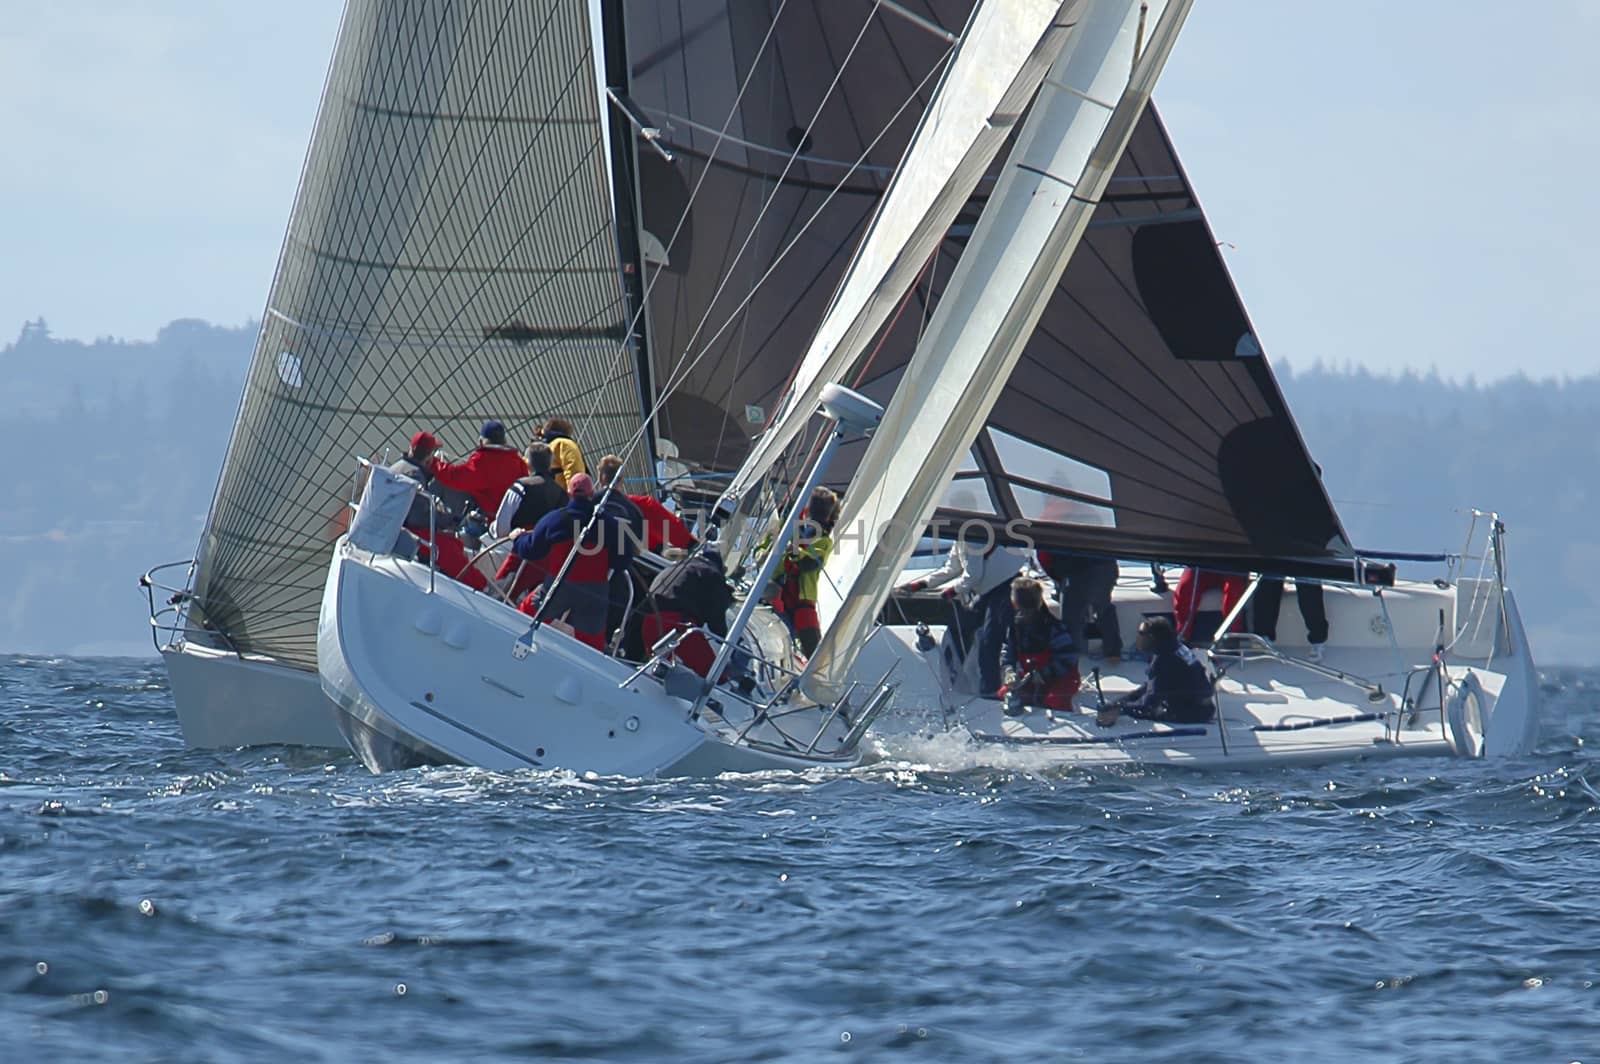 Sailboats racing on Puget Sound, WA